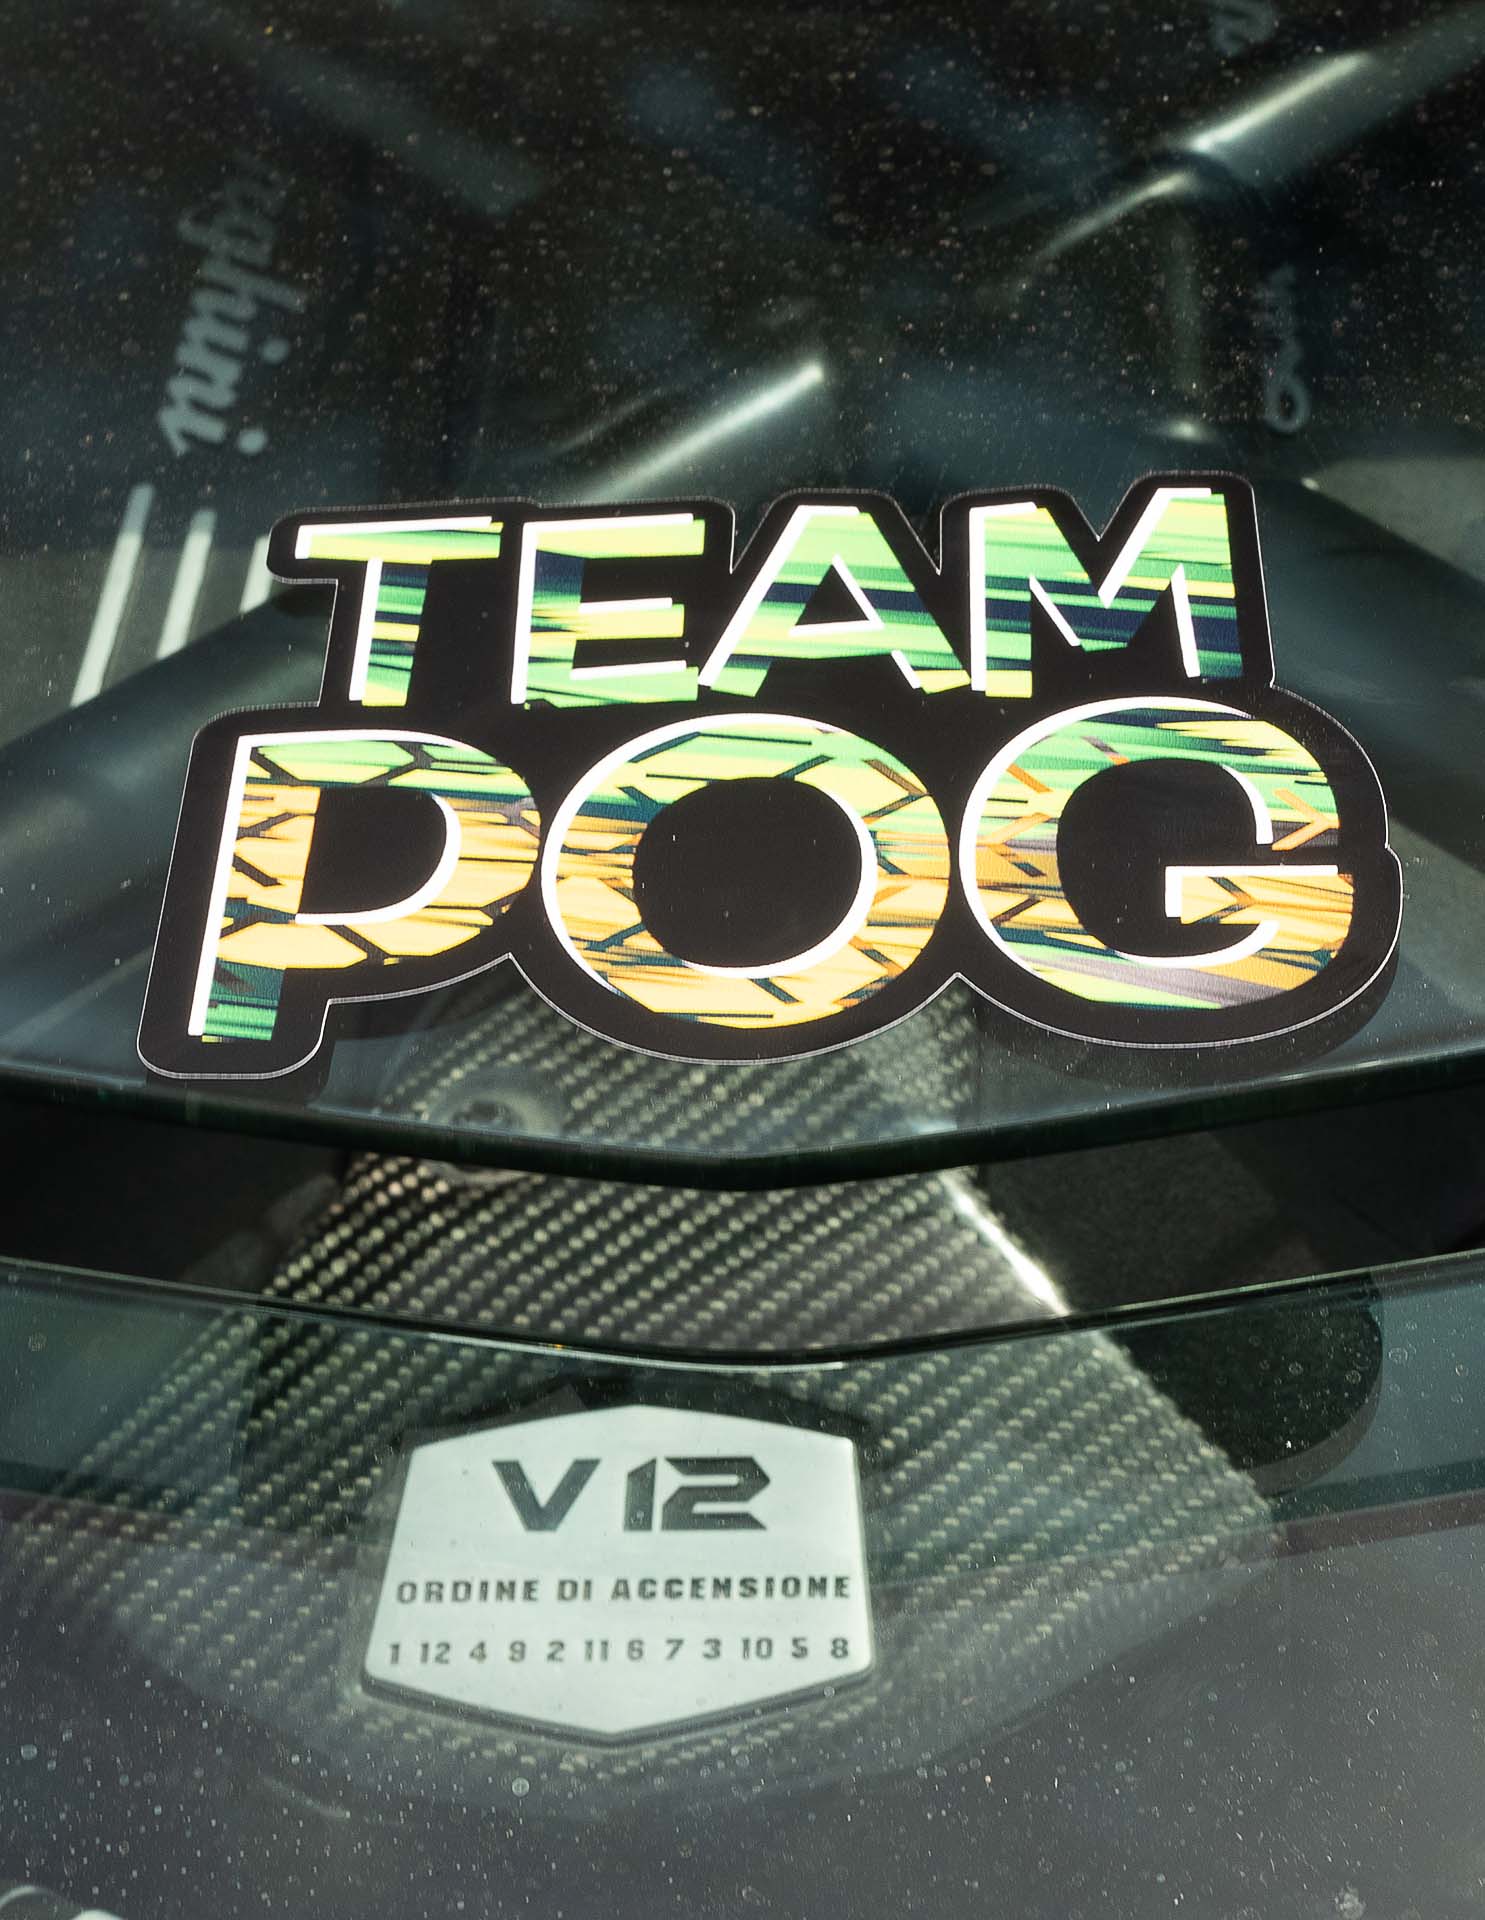 Sticker Team Pog Pogini - PogStore